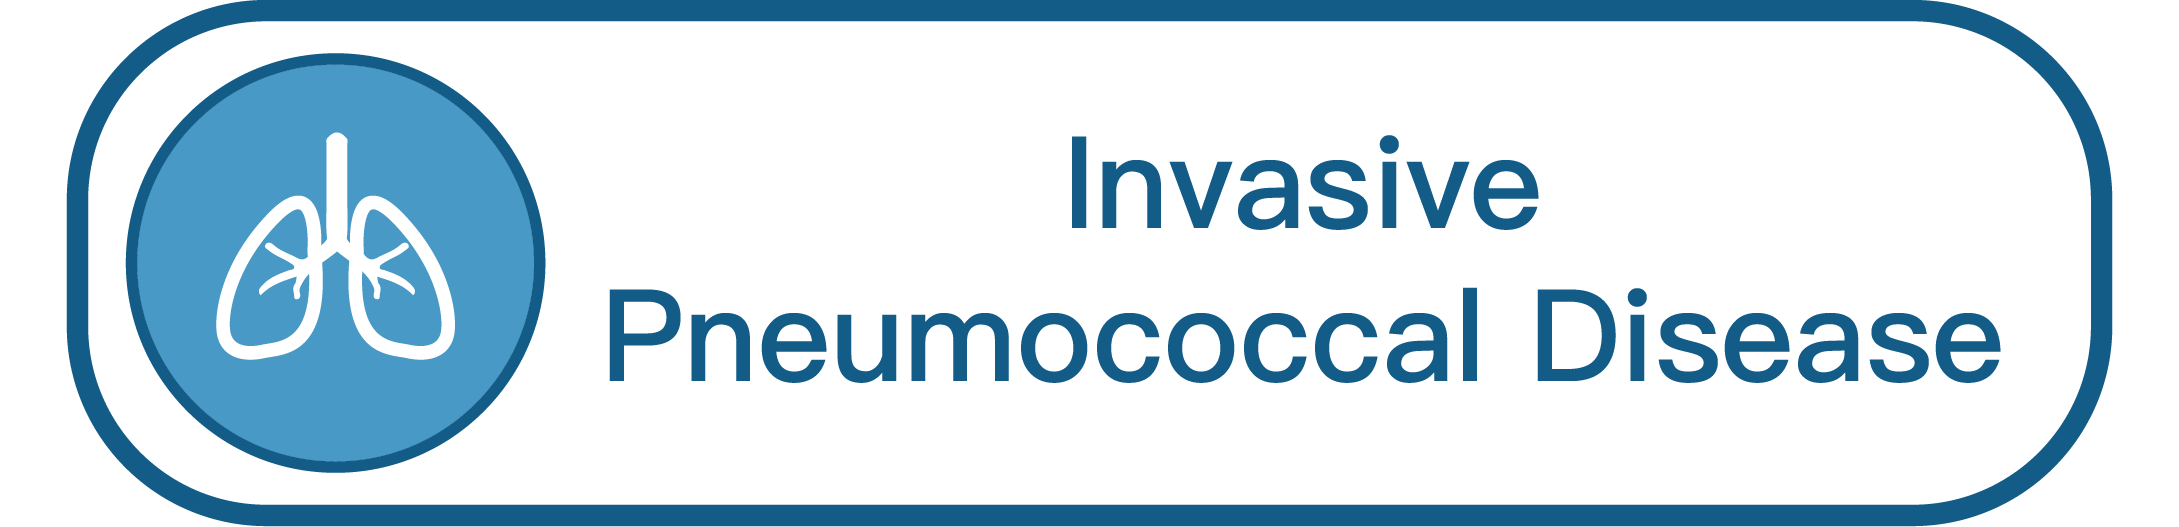 Invasive Pneumococcal Disease